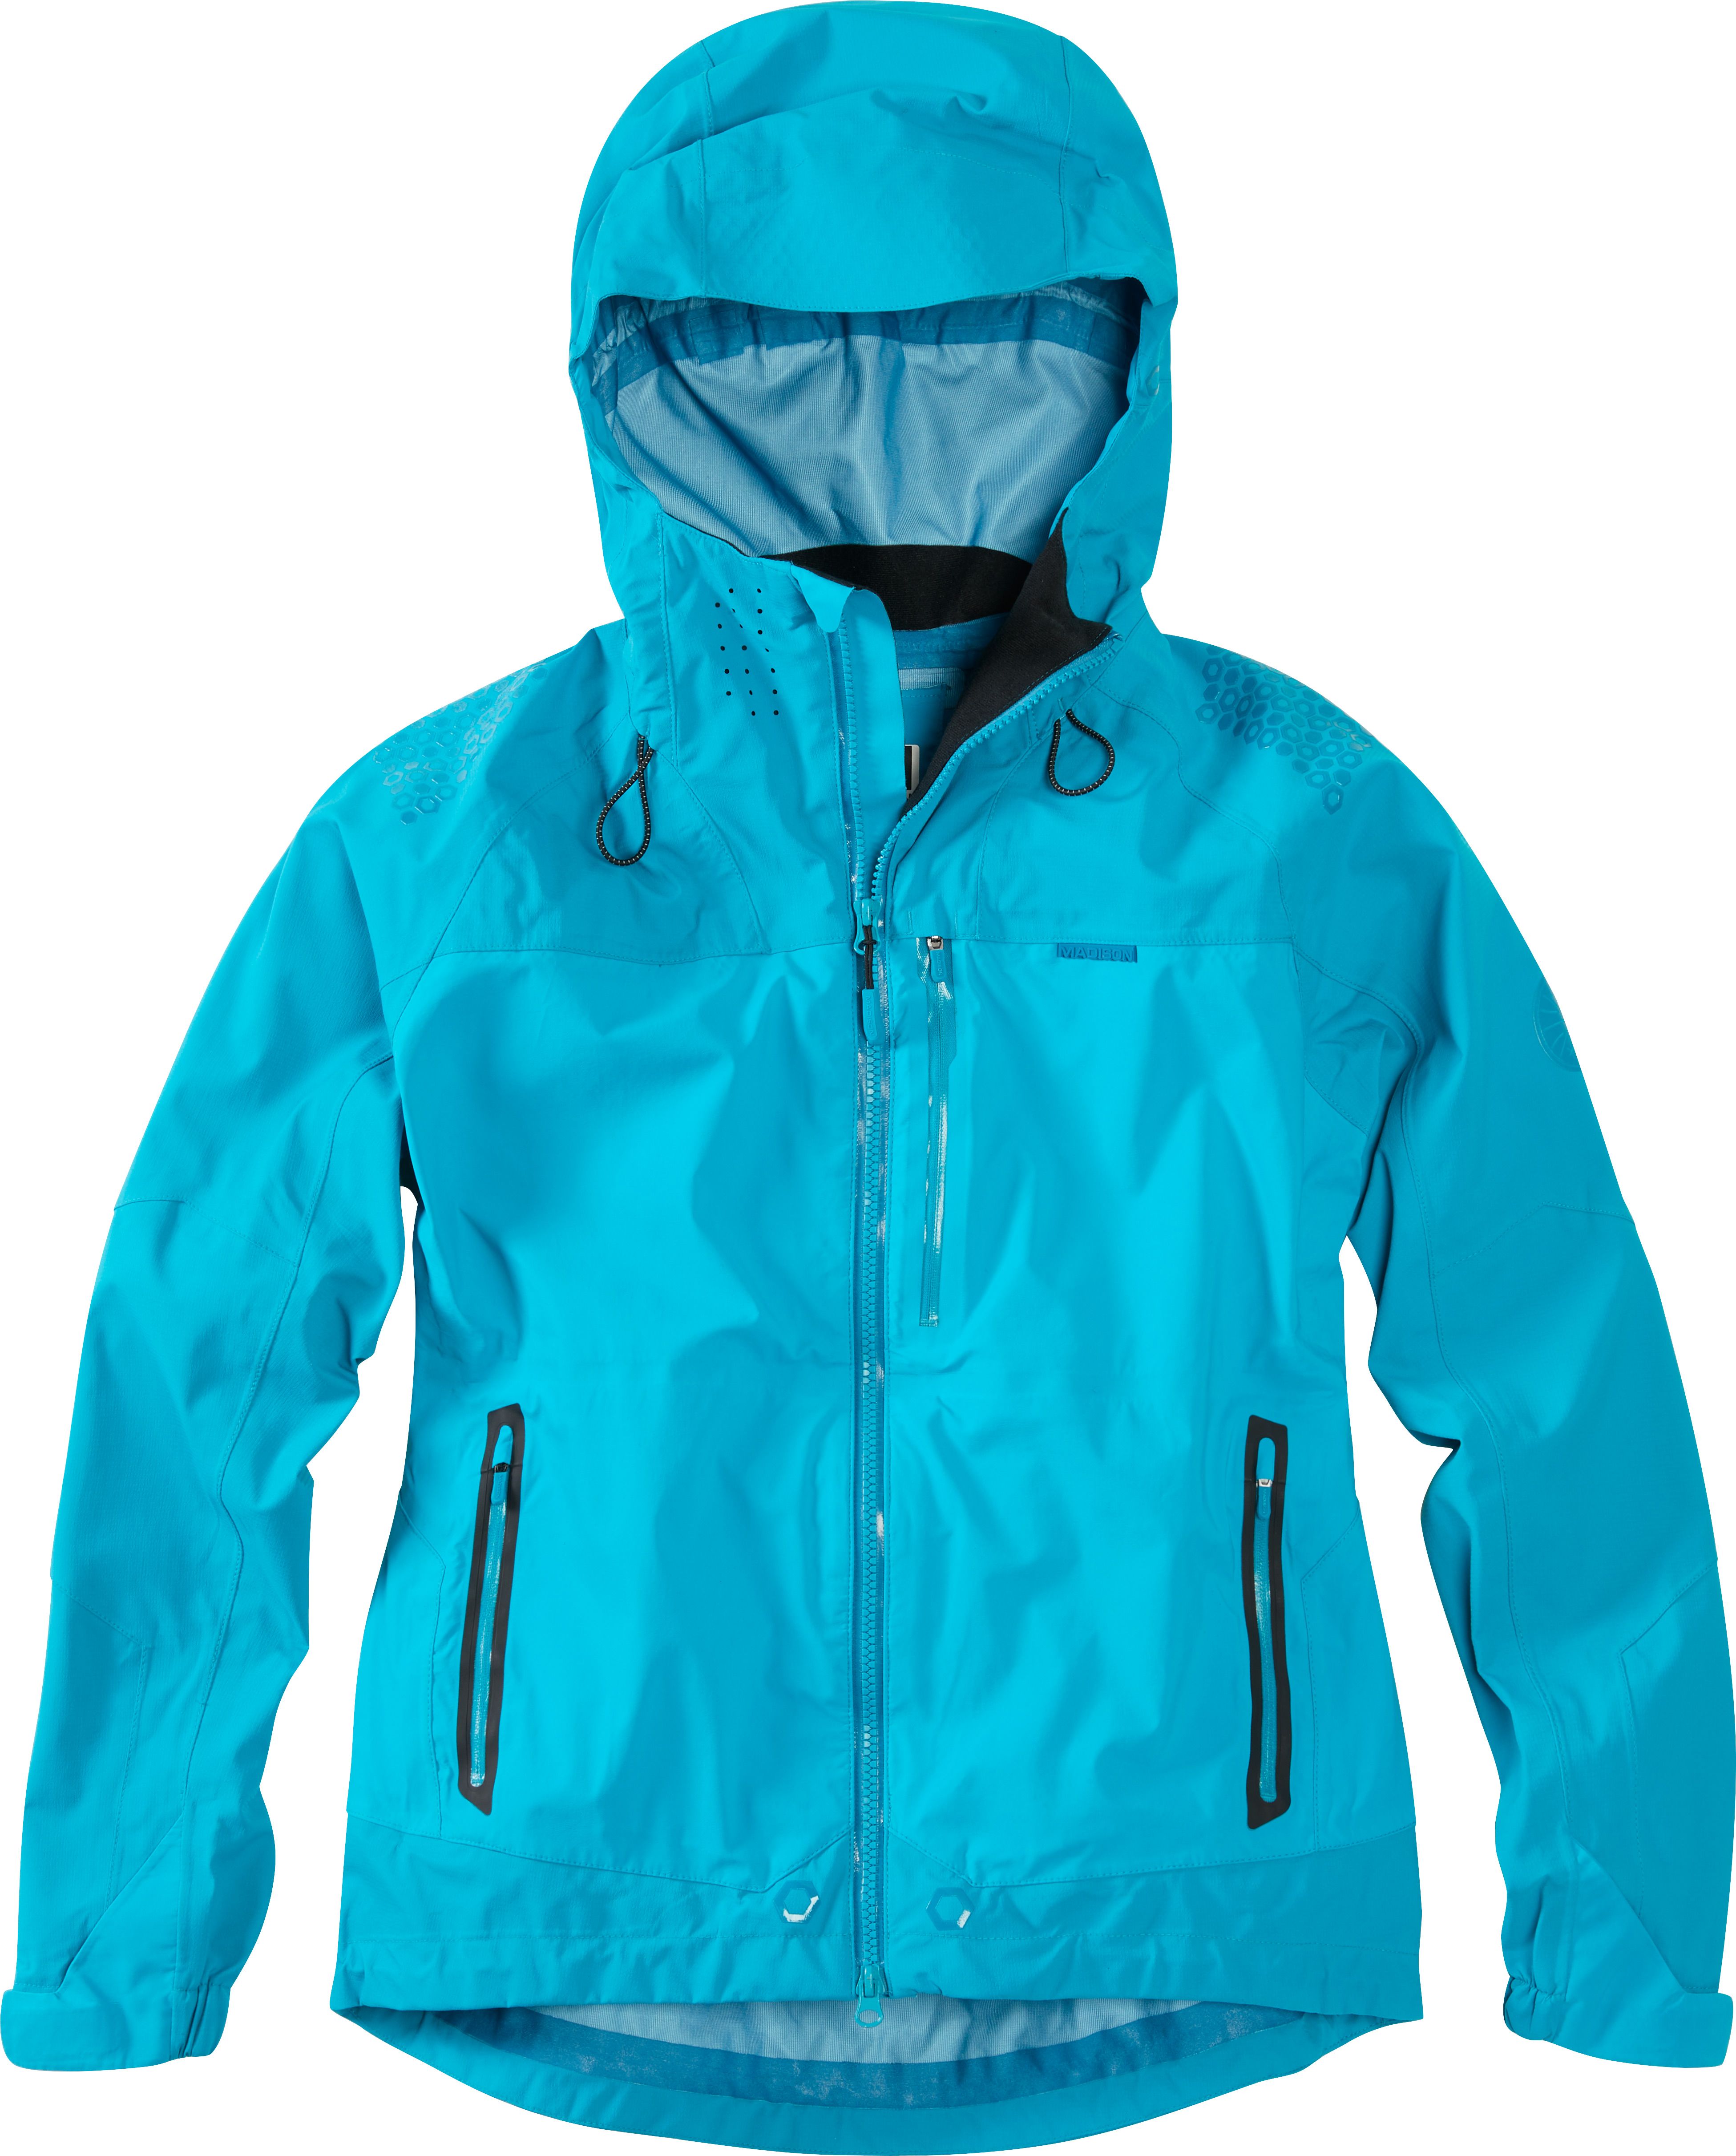 Madison Dte Womens Waterproof Jacket - £134.99 | Jackets - Waterproof ...